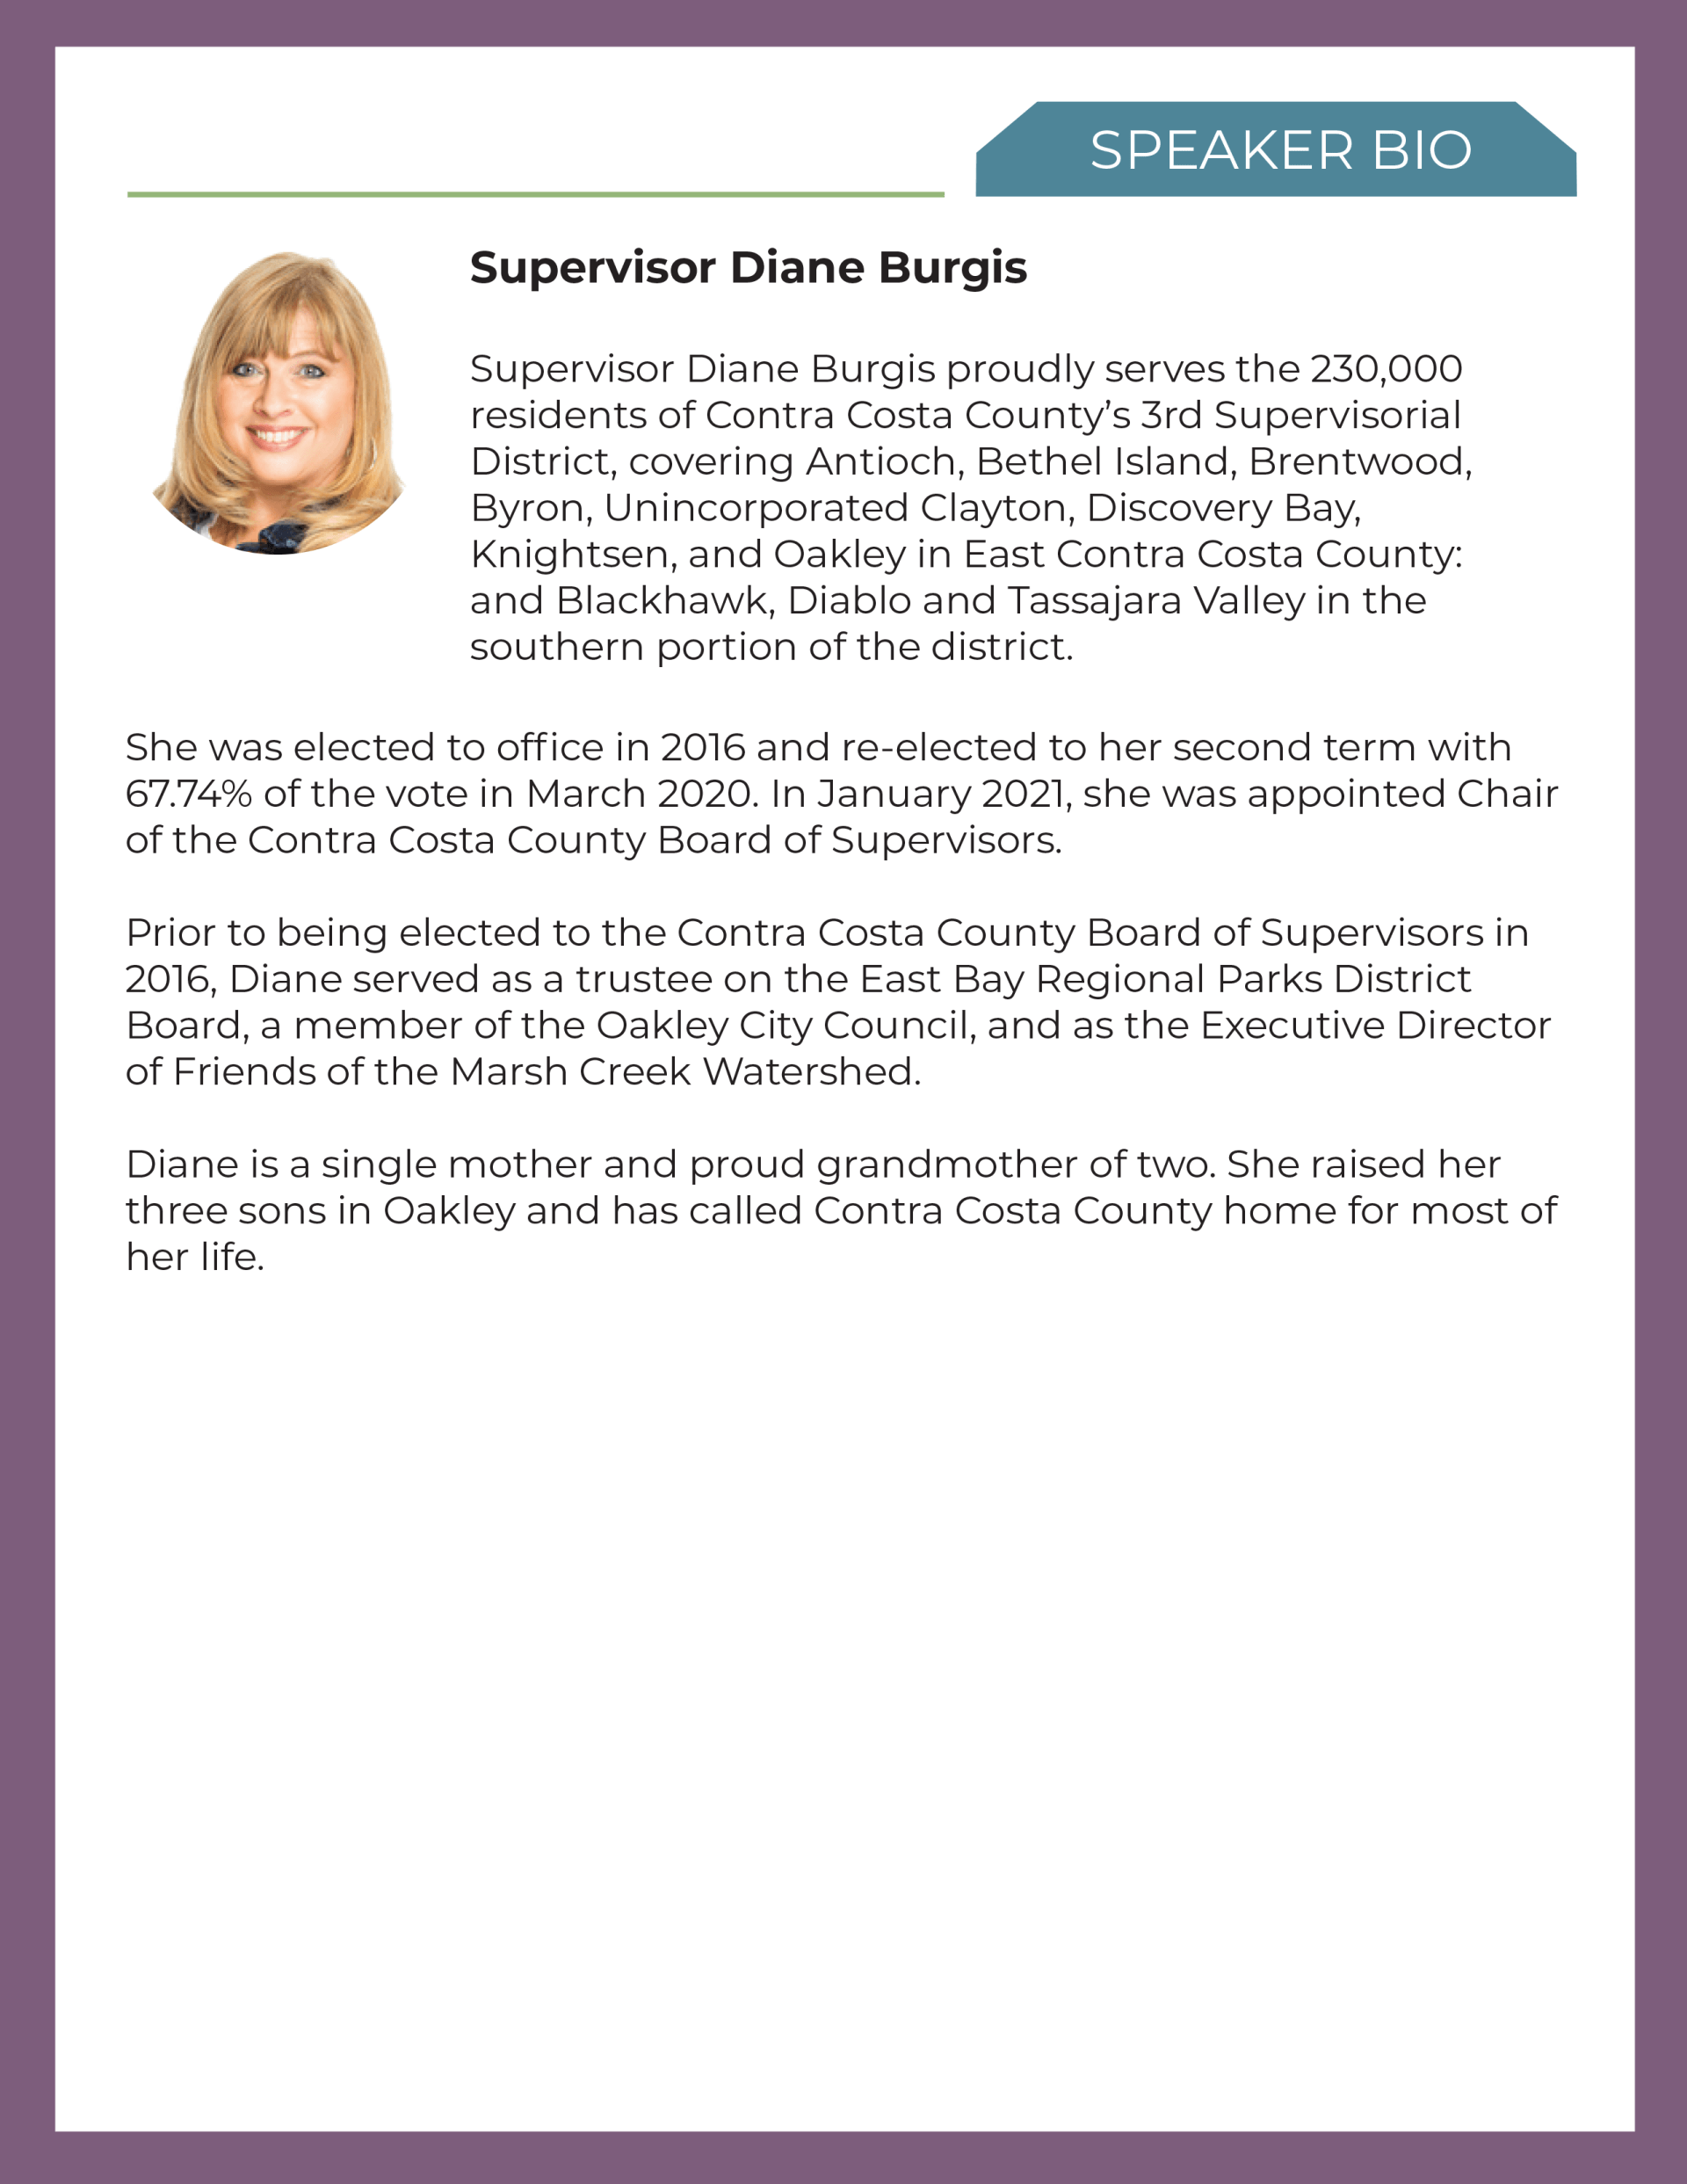 Biography of Supervisor Diane Burgis